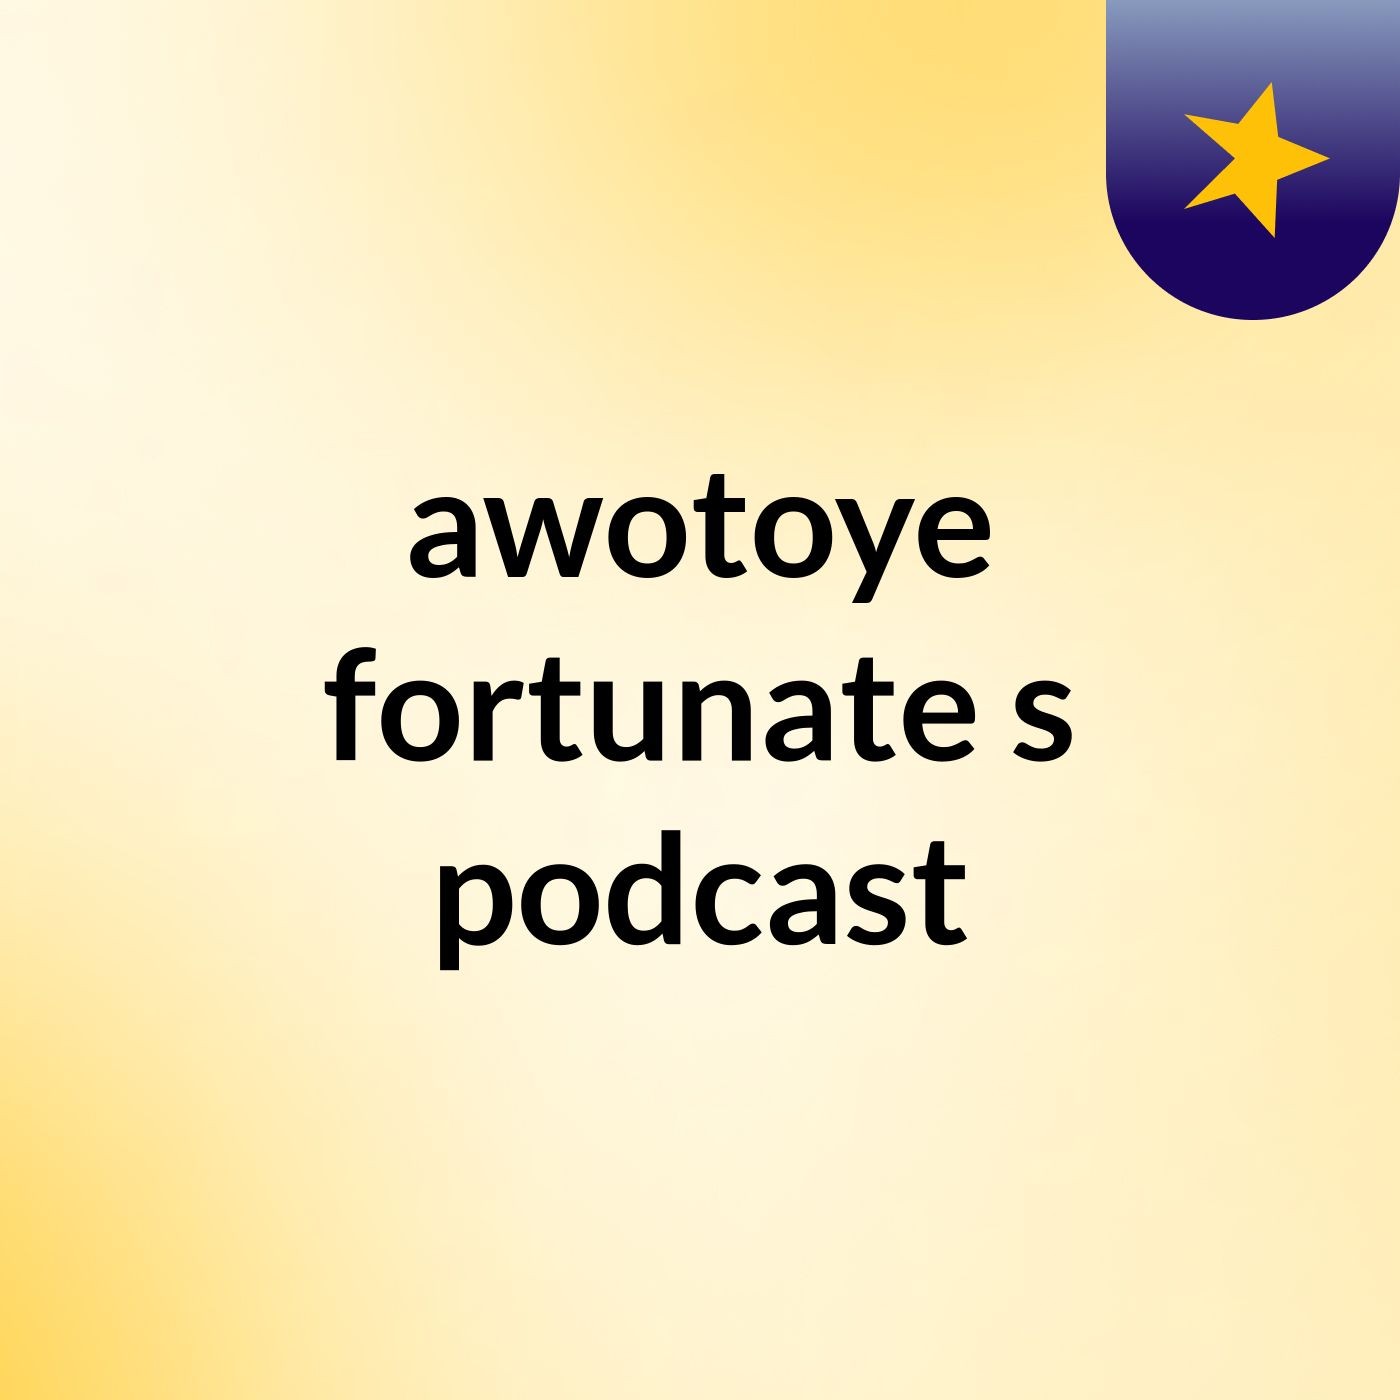 awotoye fortunate's podcast